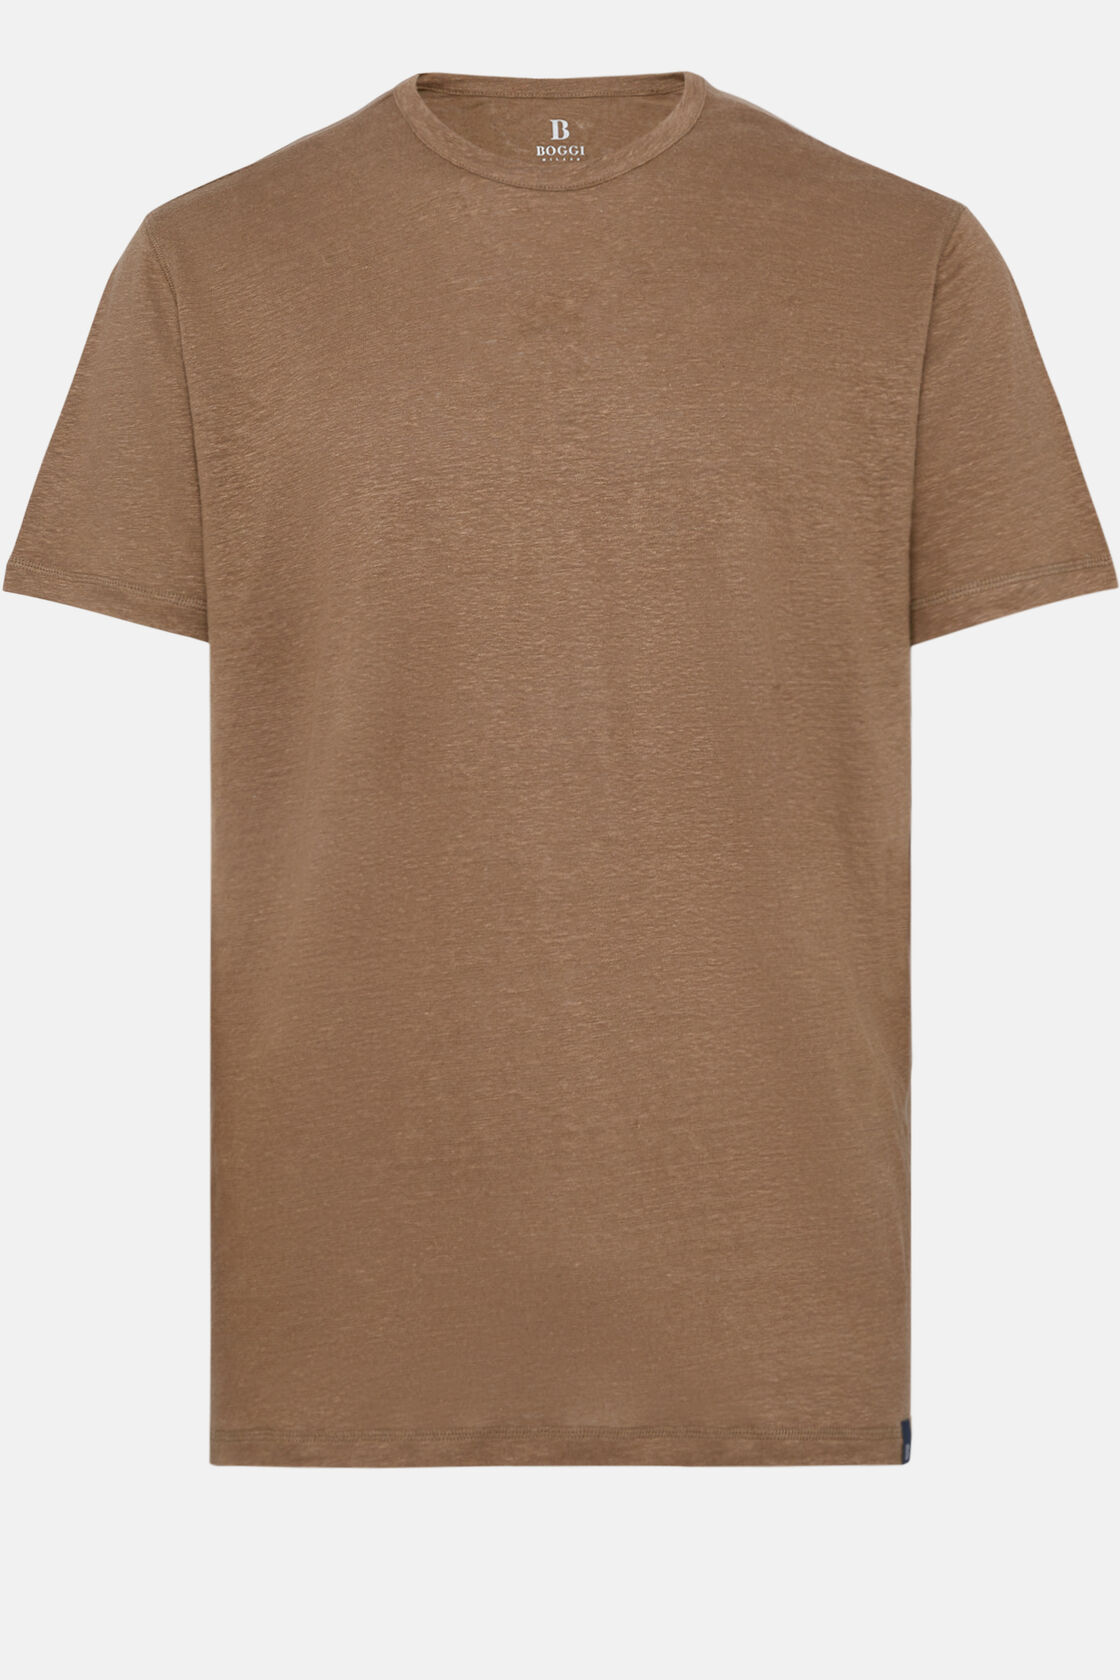 T-Shirt Aus Stretch-Leinen-Jersey, Braun, hi-res